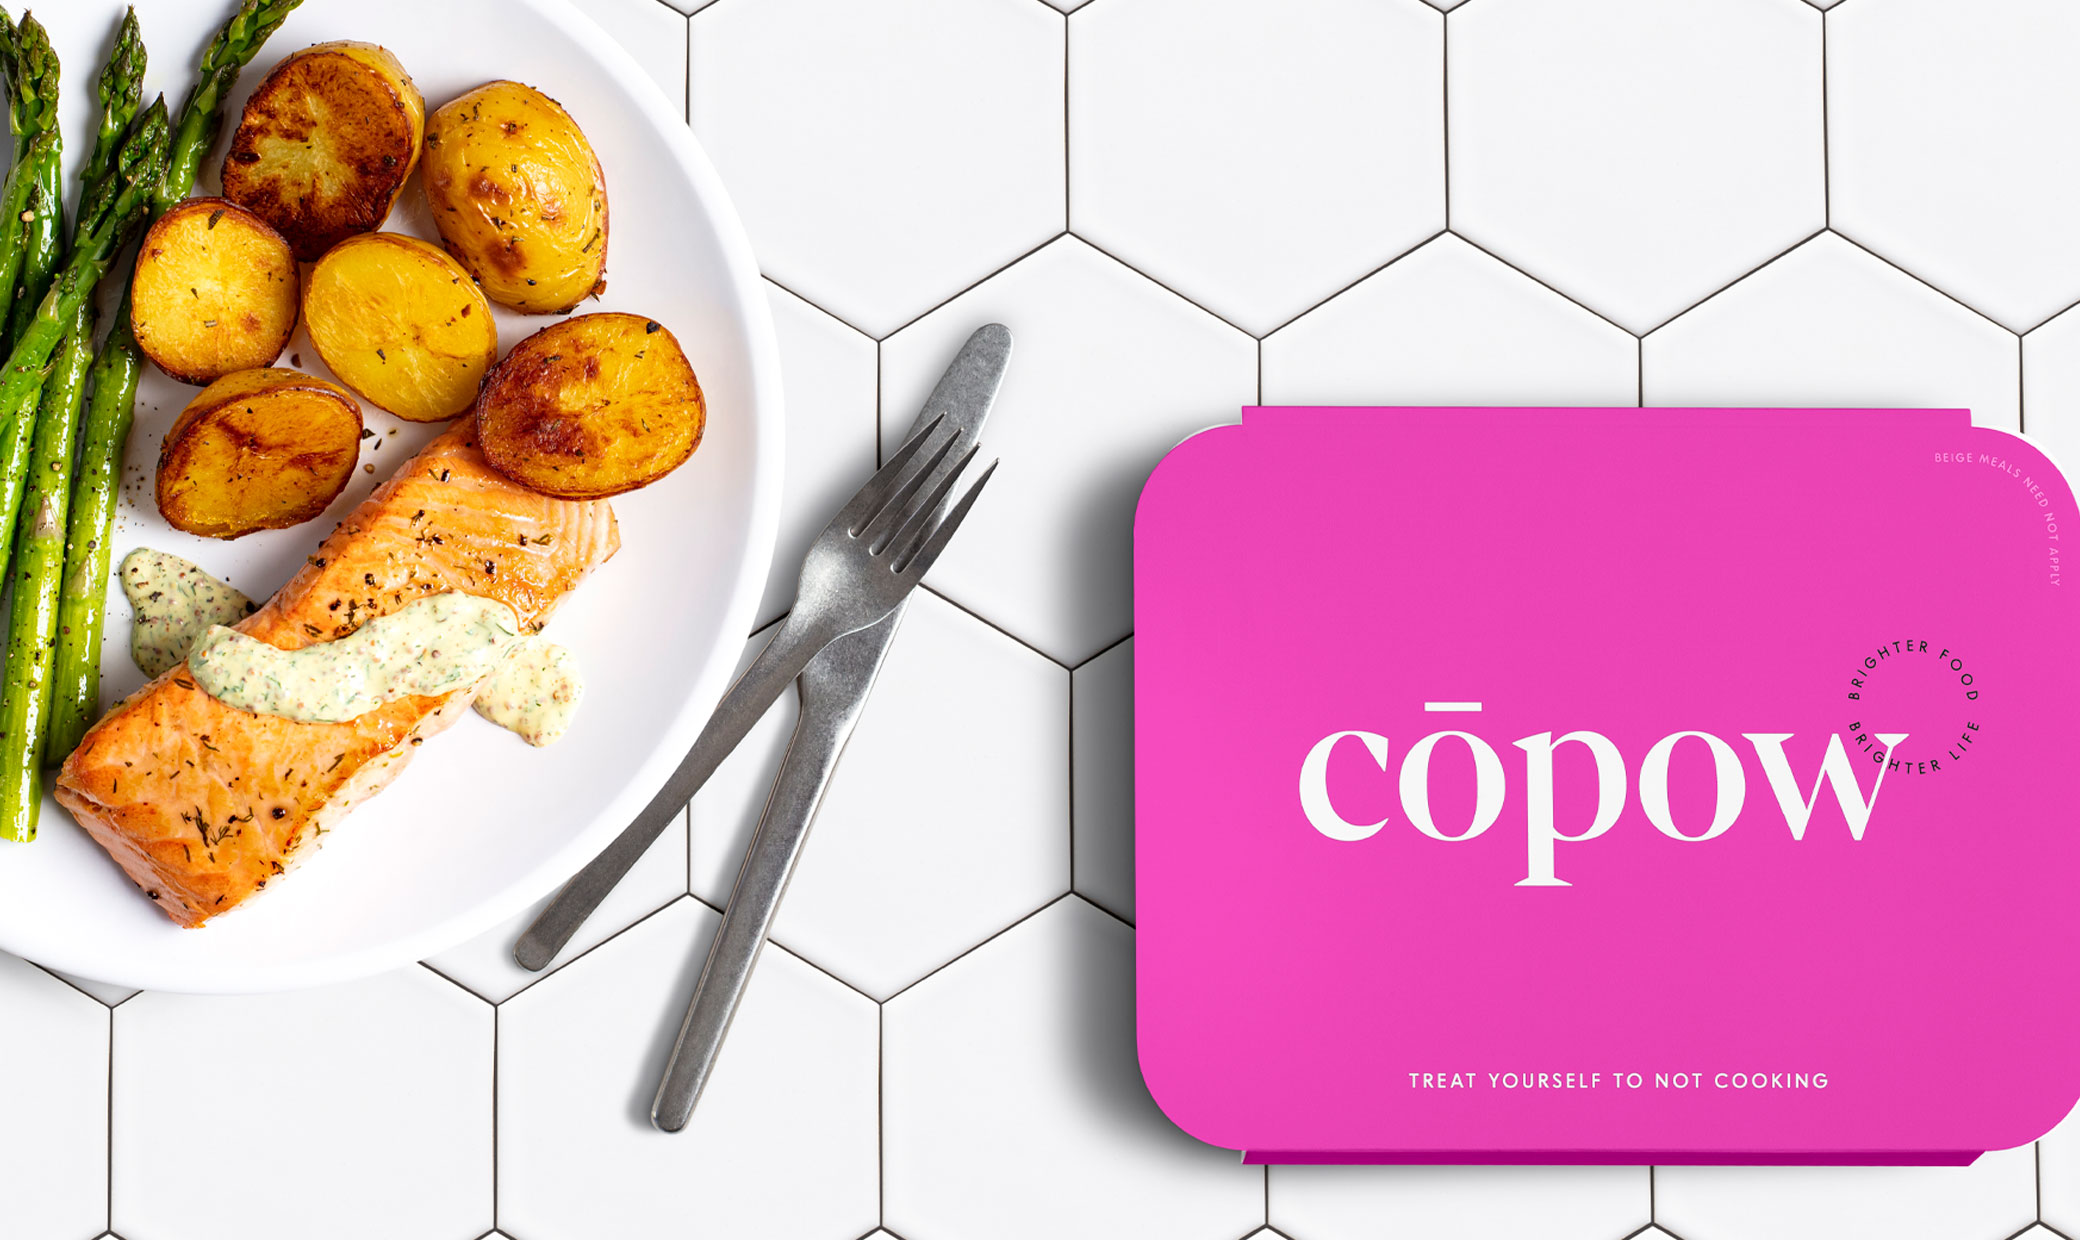 copow-meal-delivery-website-branding-packaging-design-5.jpg